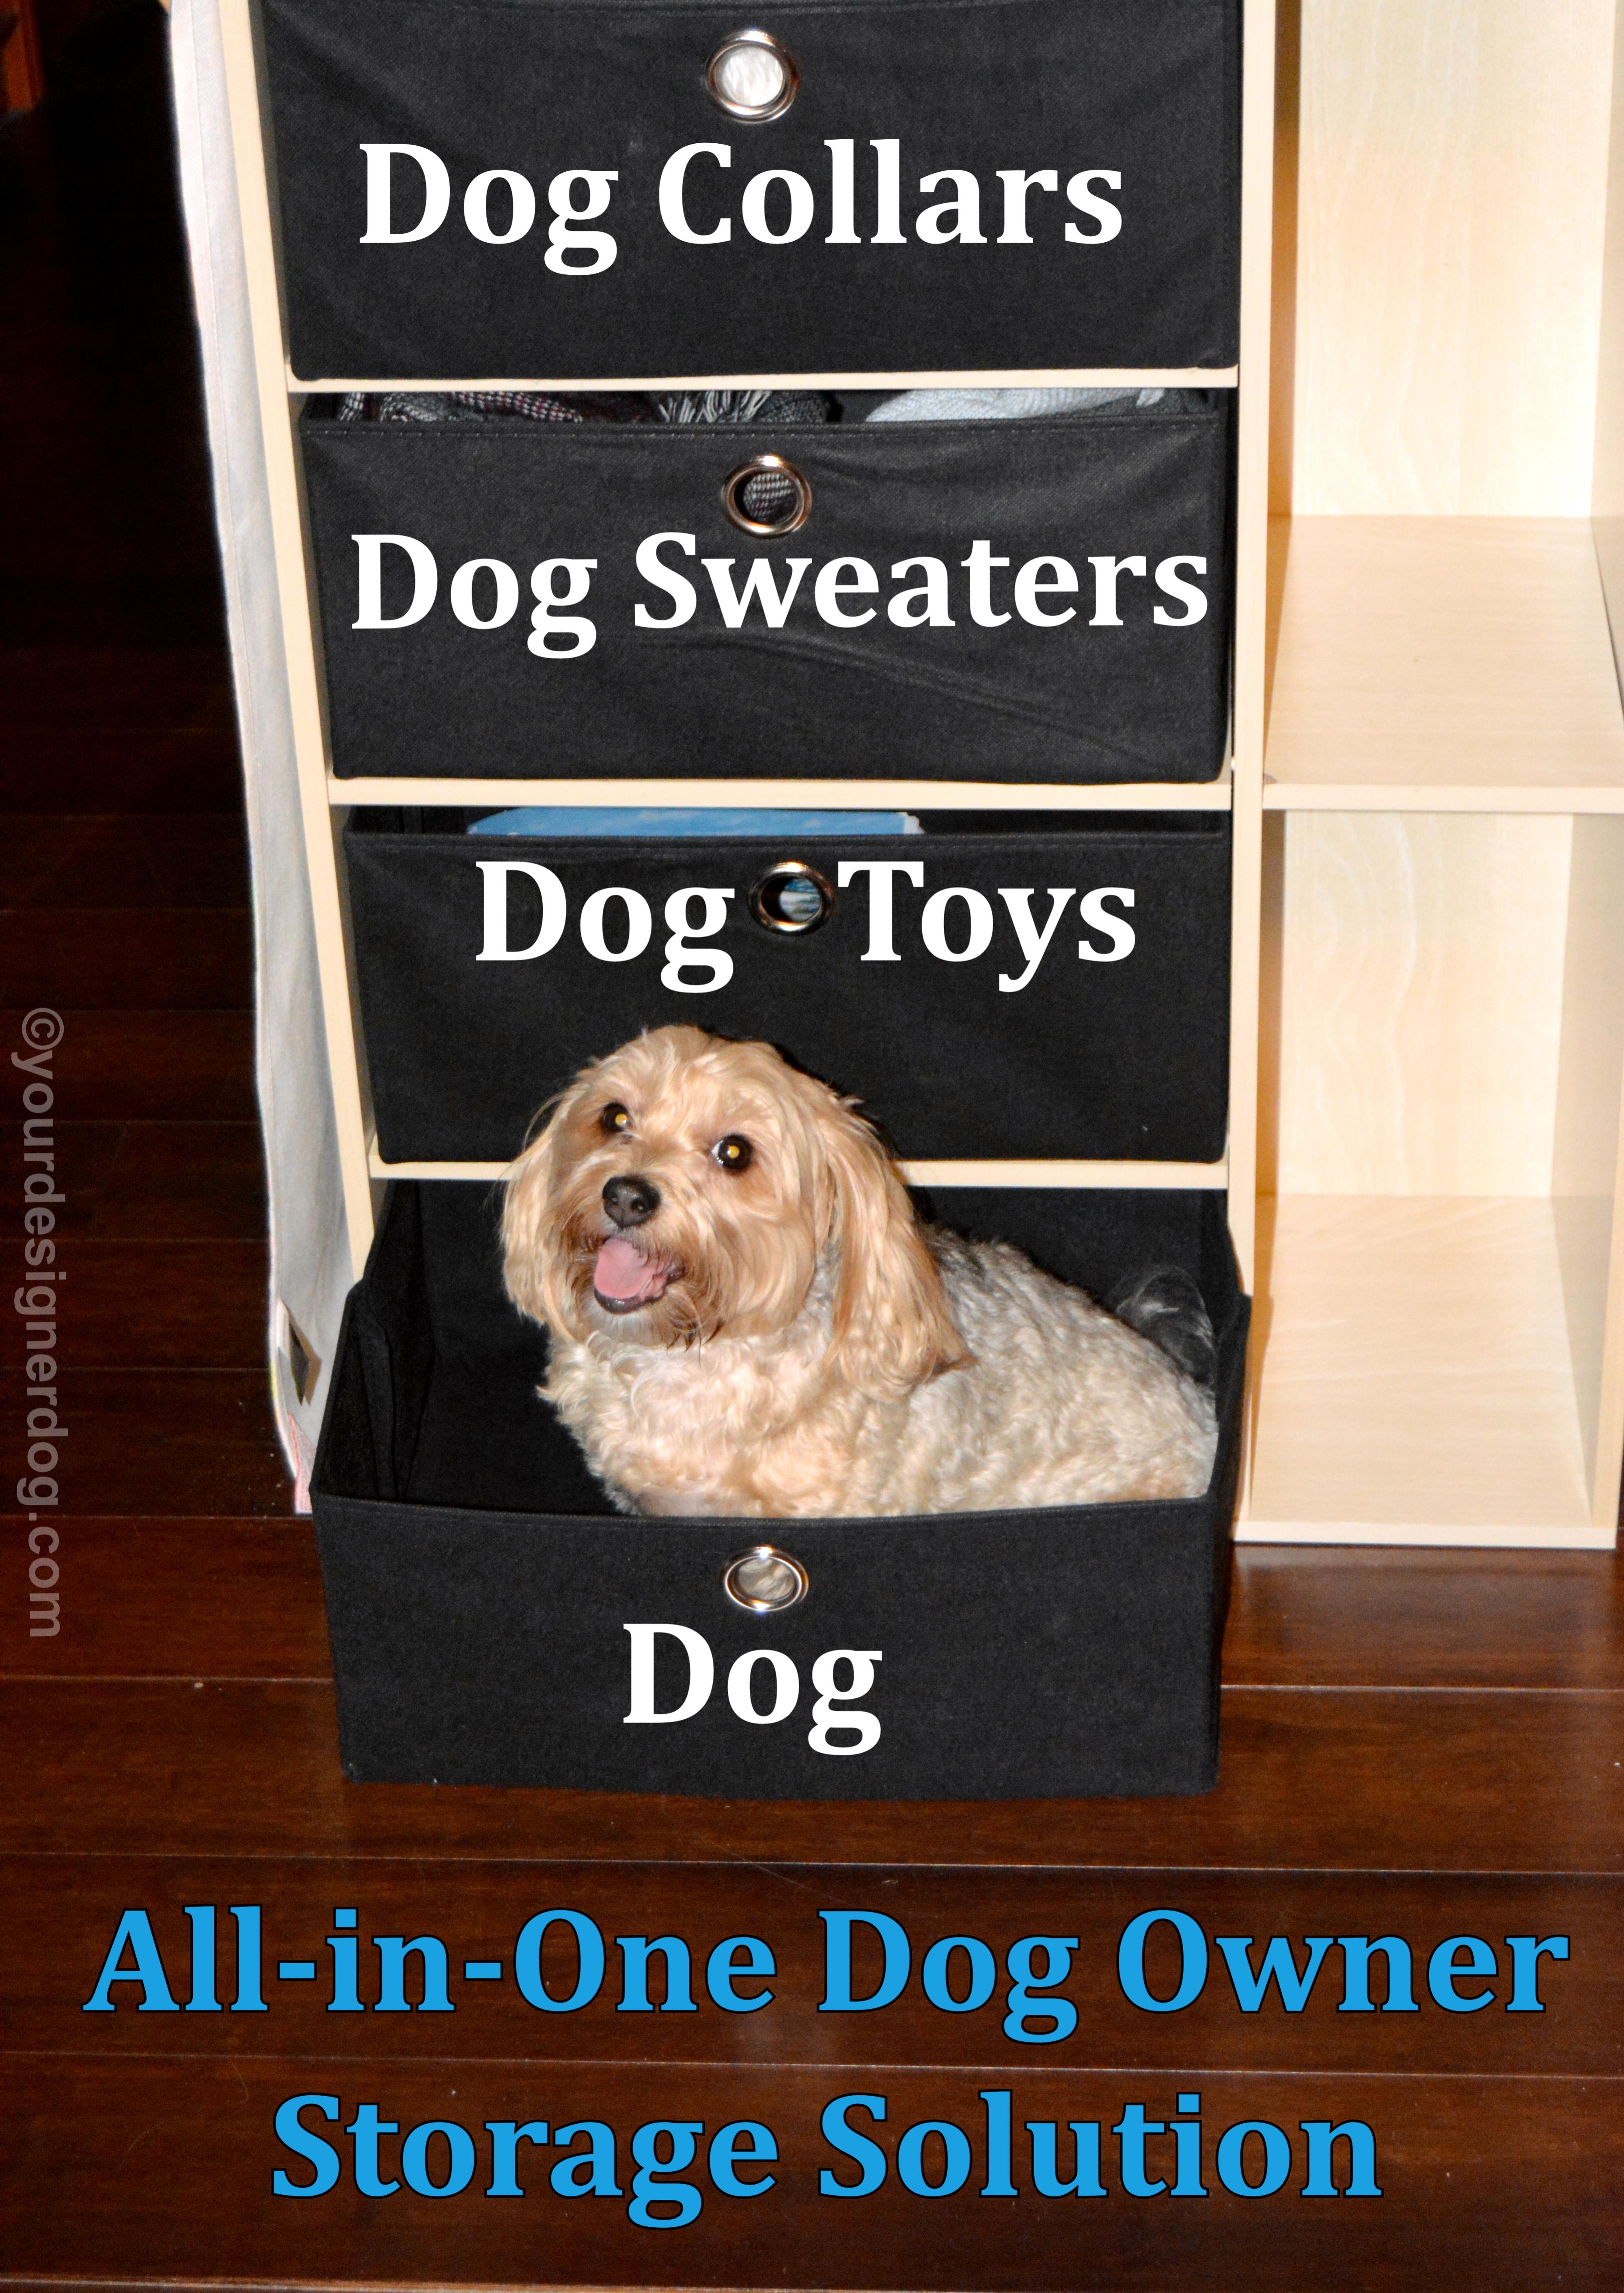 dogs, designer dogs, yorkipoo, yorkie poo, dog storage, storage furniture, dog smiling, tongue out